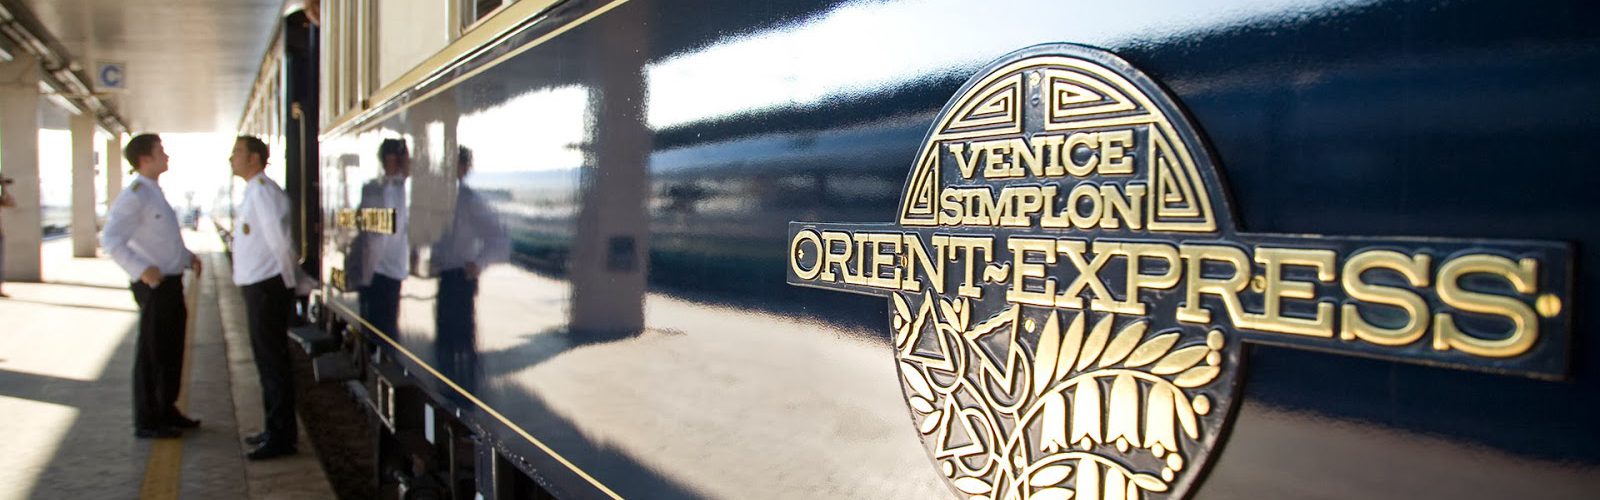 Assasinio sull'Orient Express